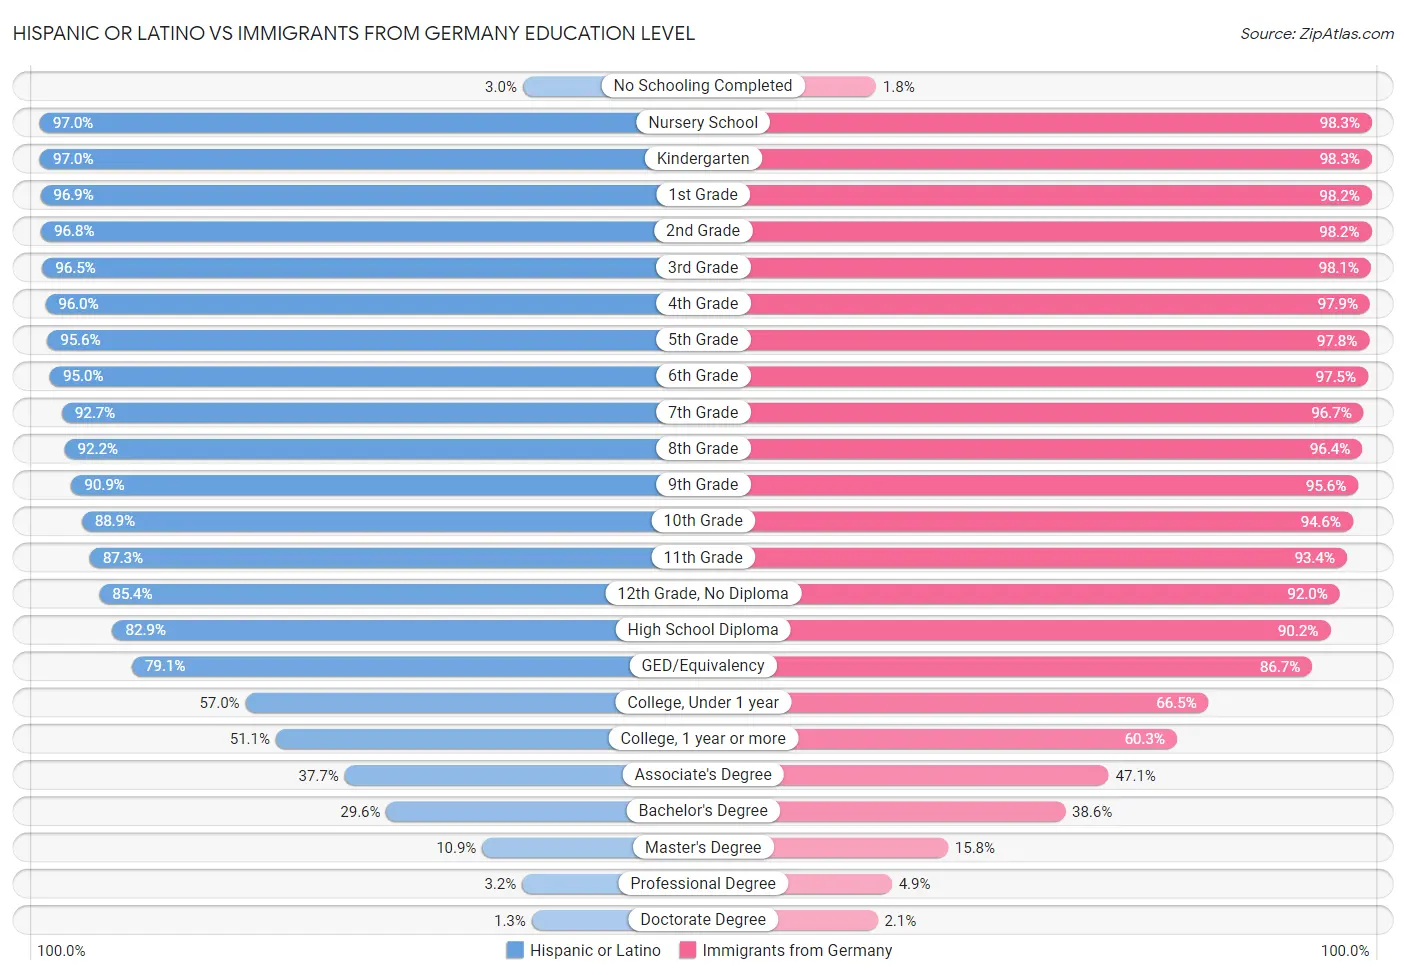 Hispanic or Latino vs Immigrants from Germany Education Level